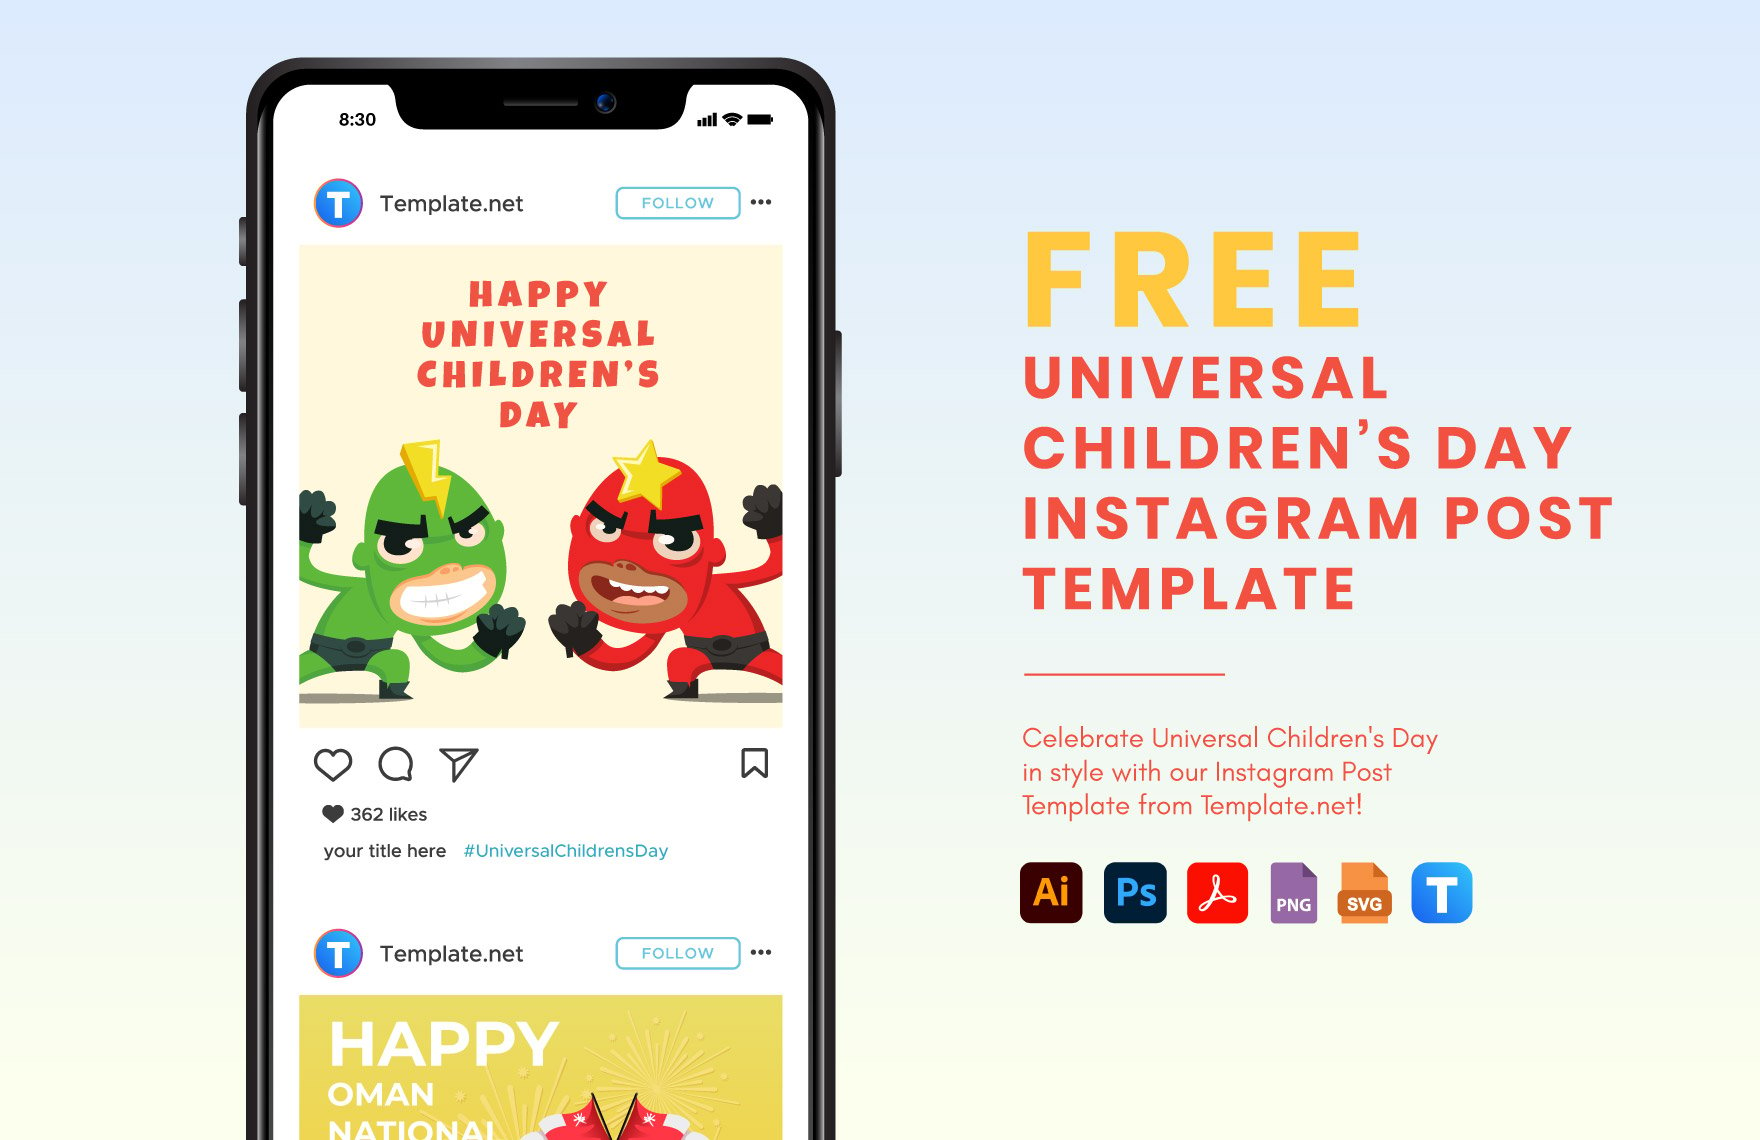 Free Universal Children’s Day LinkedIn Post Template in PDF, Illustrator, PSD, SVG, PNG